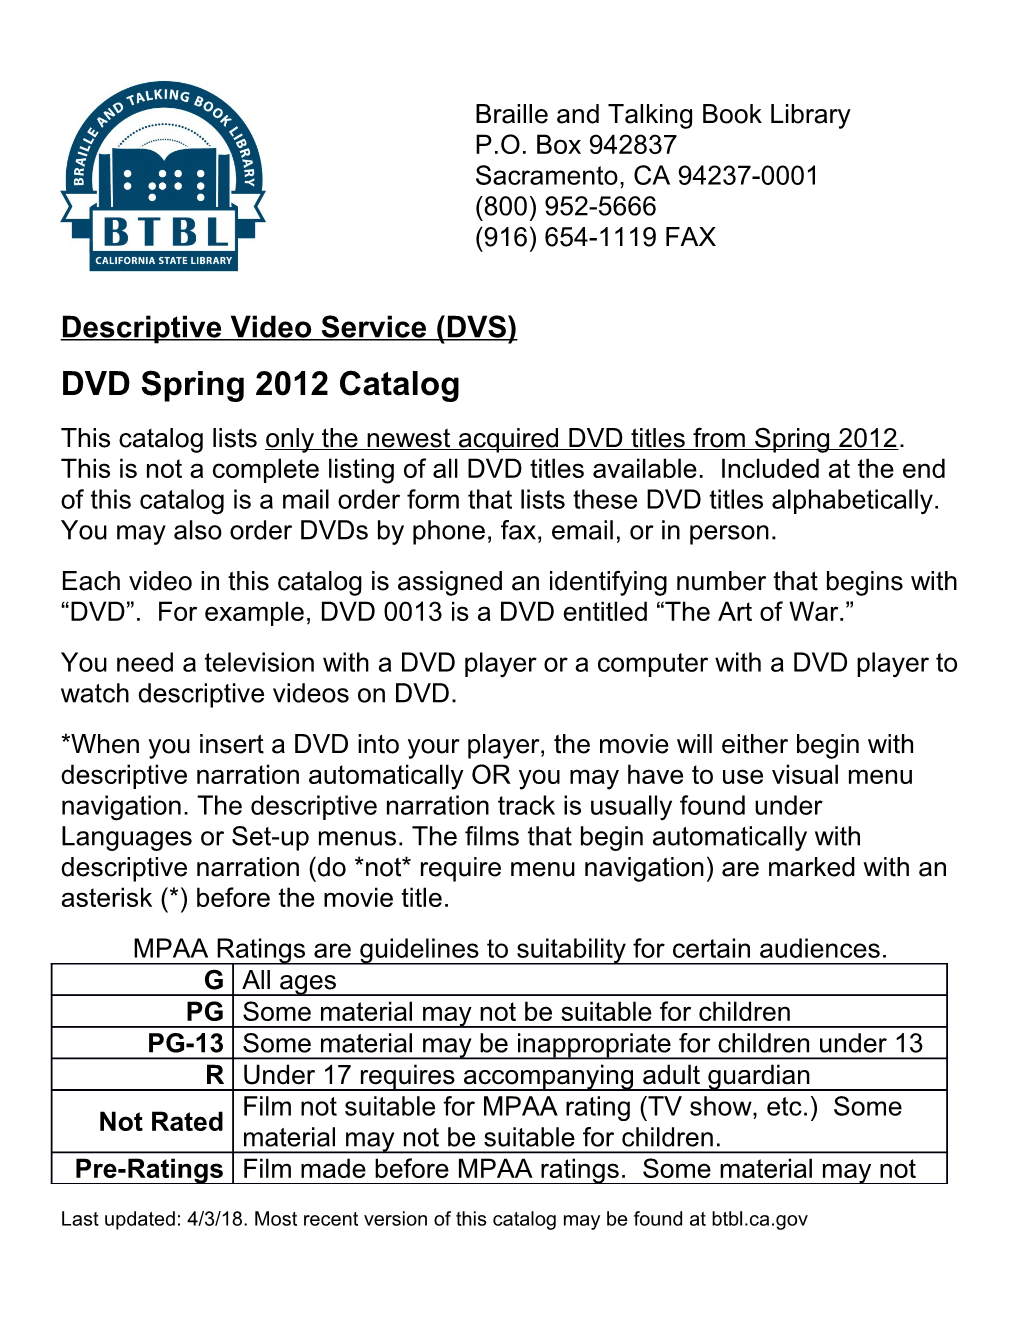 Descriptive Video Service (DVS) s1